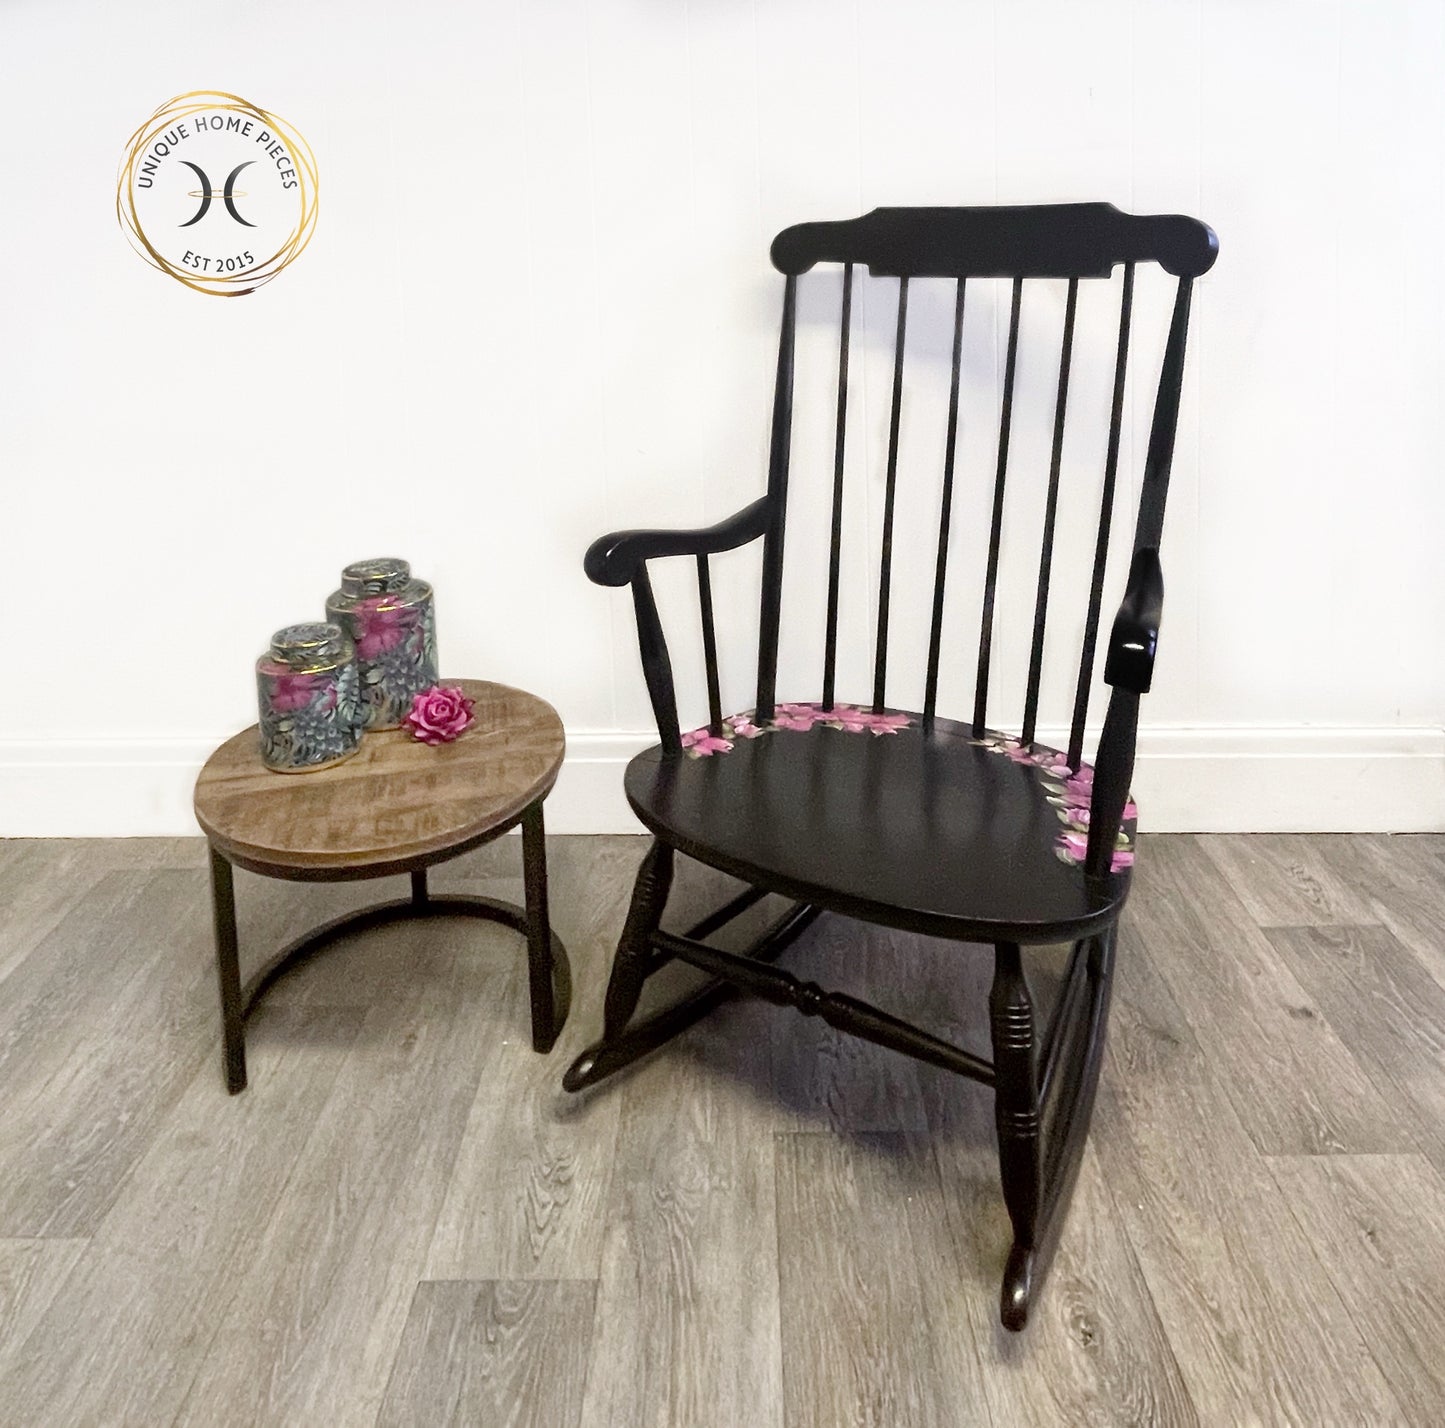 Black Vintage Wheel back Rocking Chair with Pink Wildflower Design